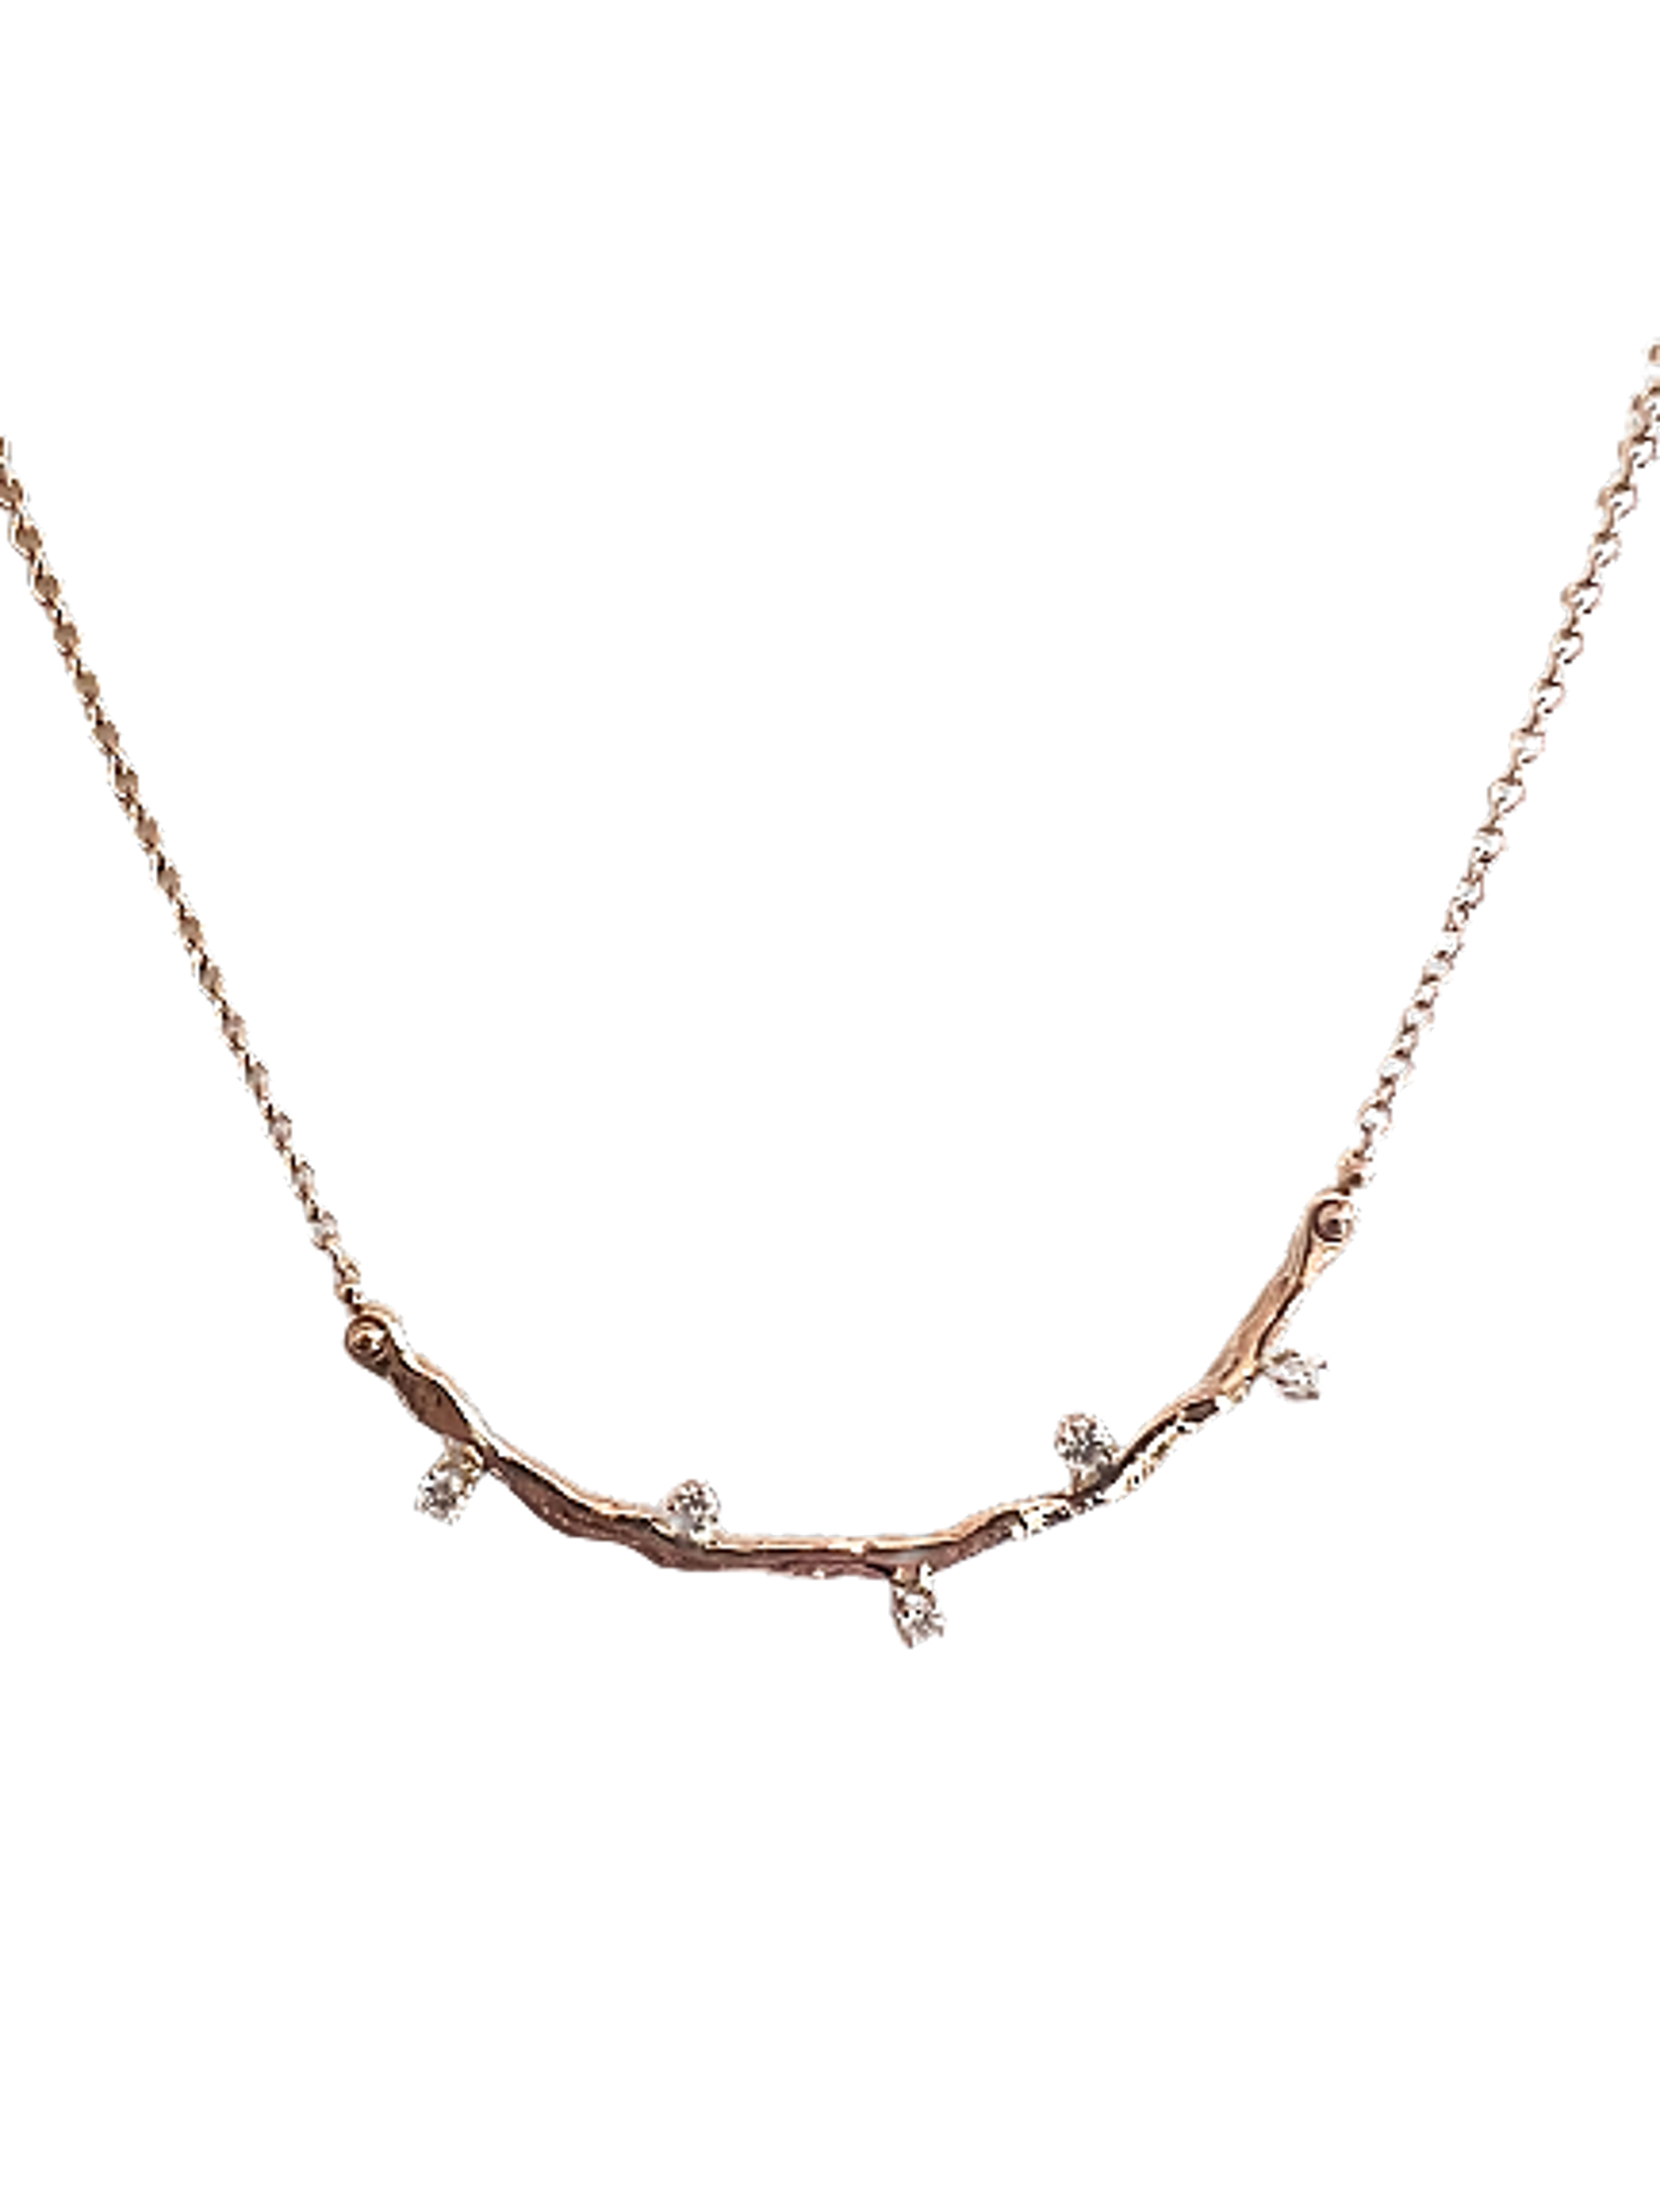 Veiled Horizon Gem Necklace - 14k Rose Gold & Lab-Grown Diamonds by Kristen Baird